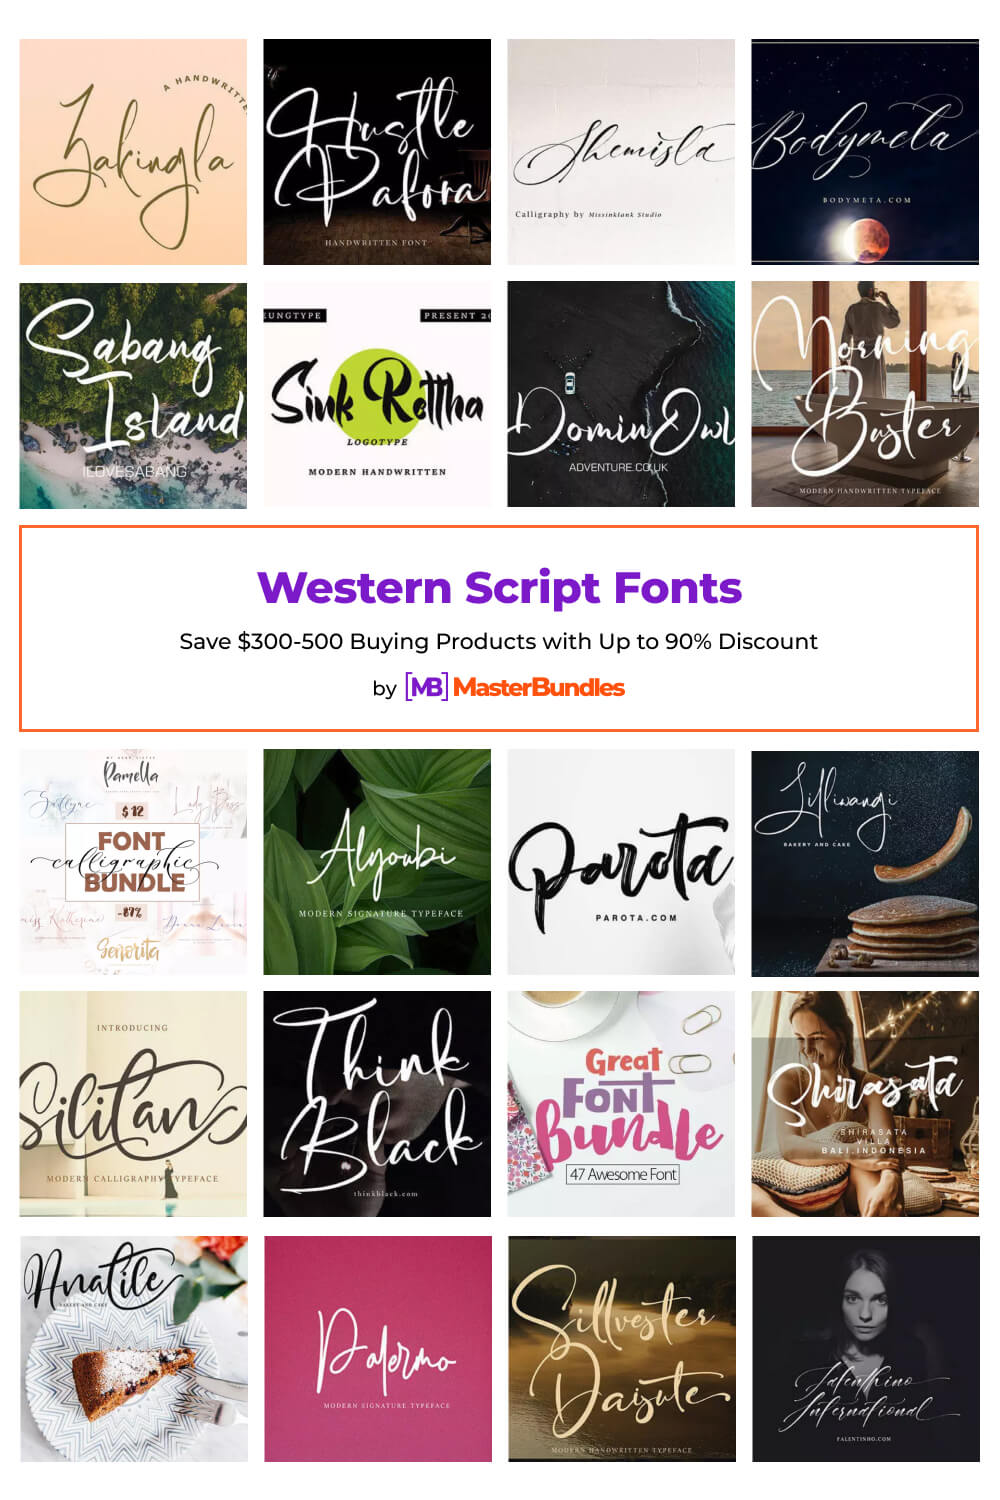 western script fonts pinterest image.